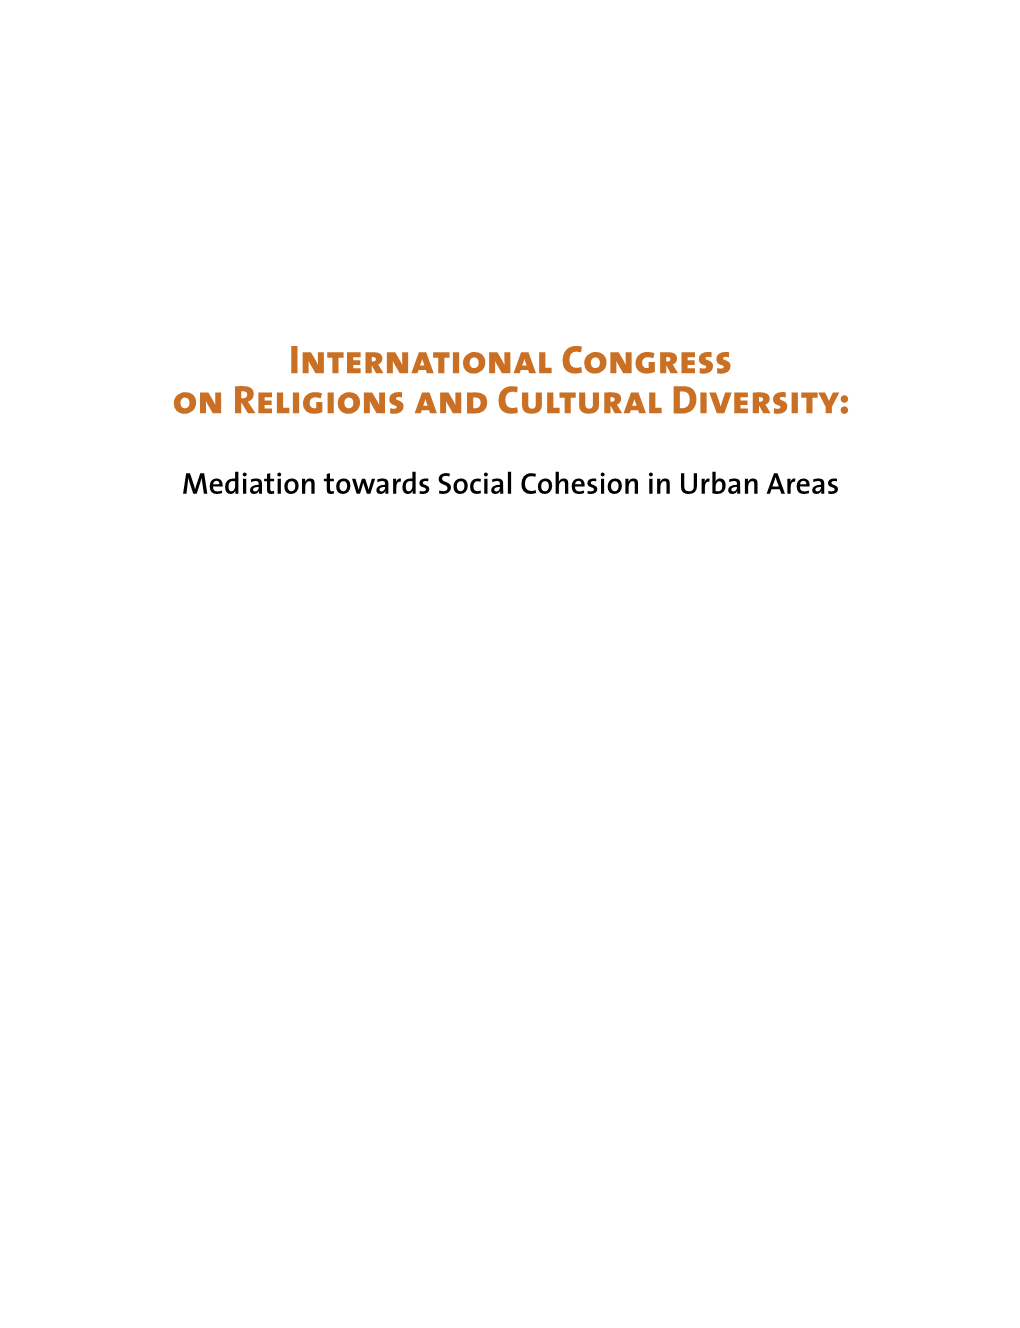 Contributions of the International Congress (Barcelona, 2006)